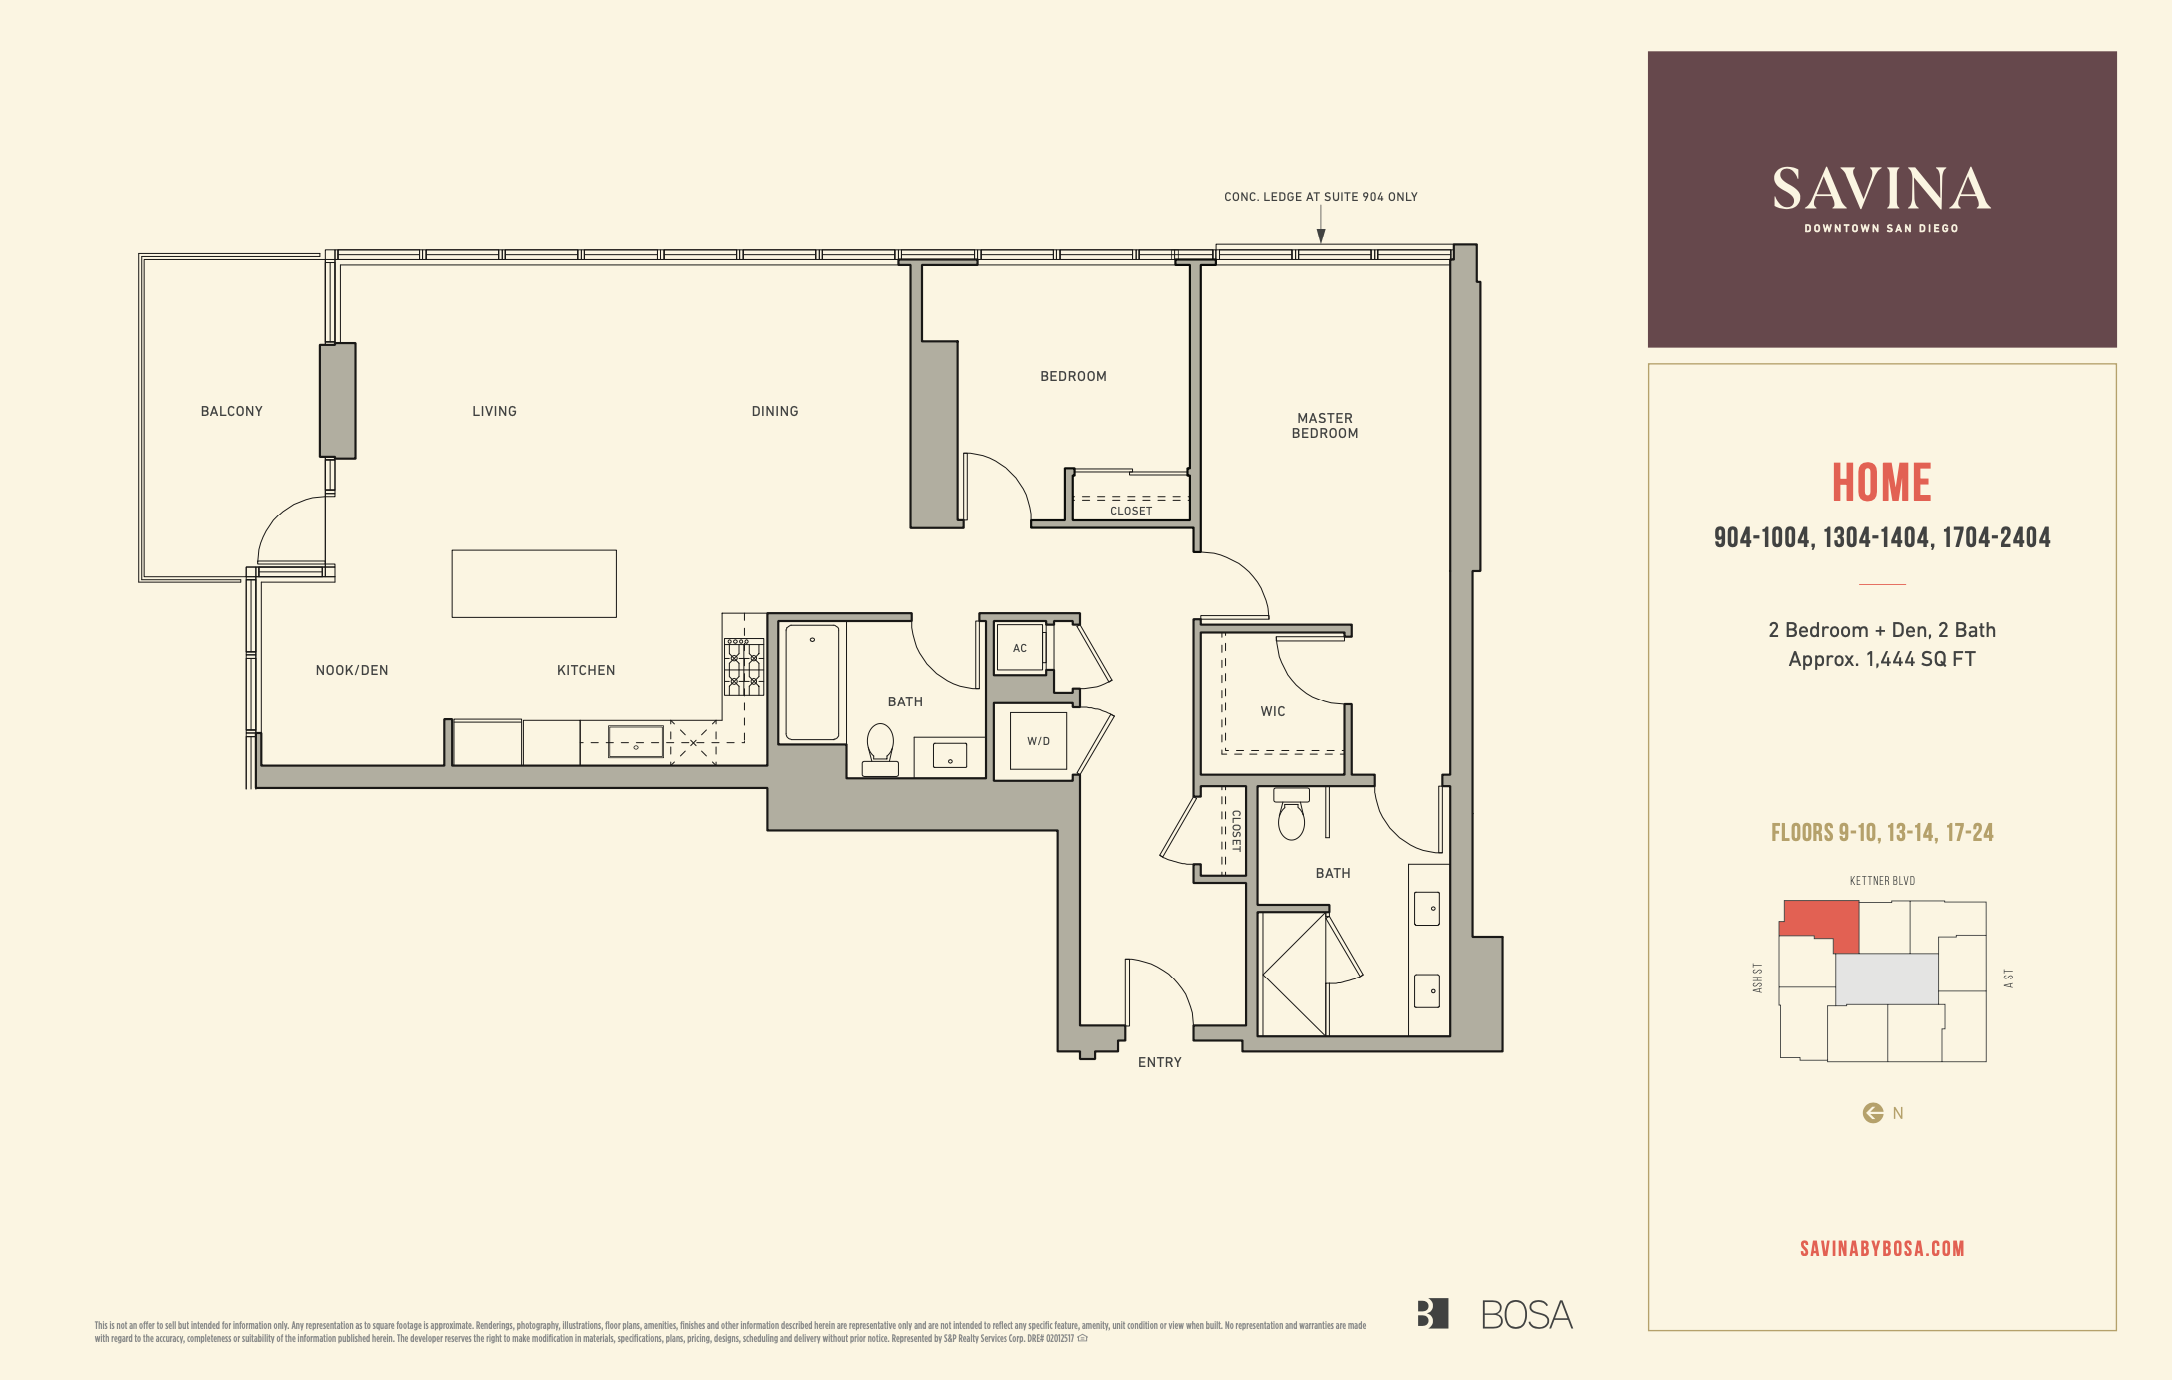 Savina residence 904, 1004, 1304, 1404, 1704 thru 2402 floor plan